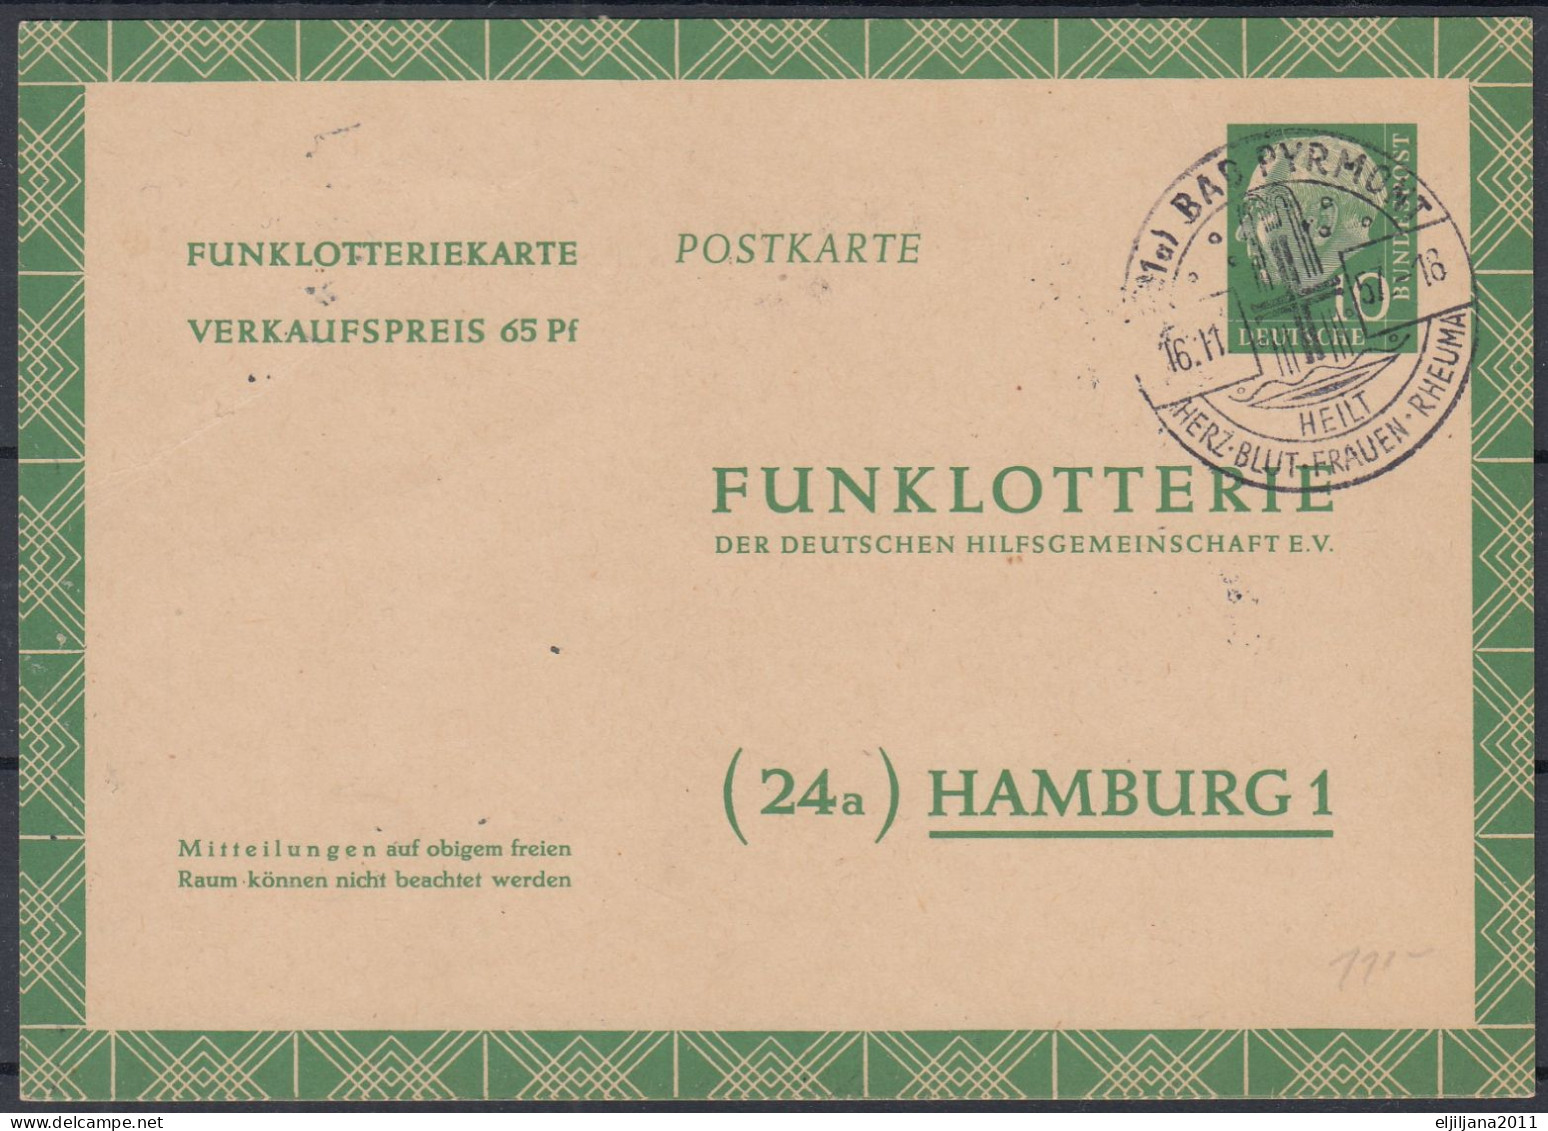 ⁕ Germany 1957 Deutsche BundesPost ⁕ FUNKLOTTERIE (24a) Hamburg 1 ⁕ Bad Pyrmont Postmark ⁕ Stationery Postcard - Postkaarten - Gebruikt